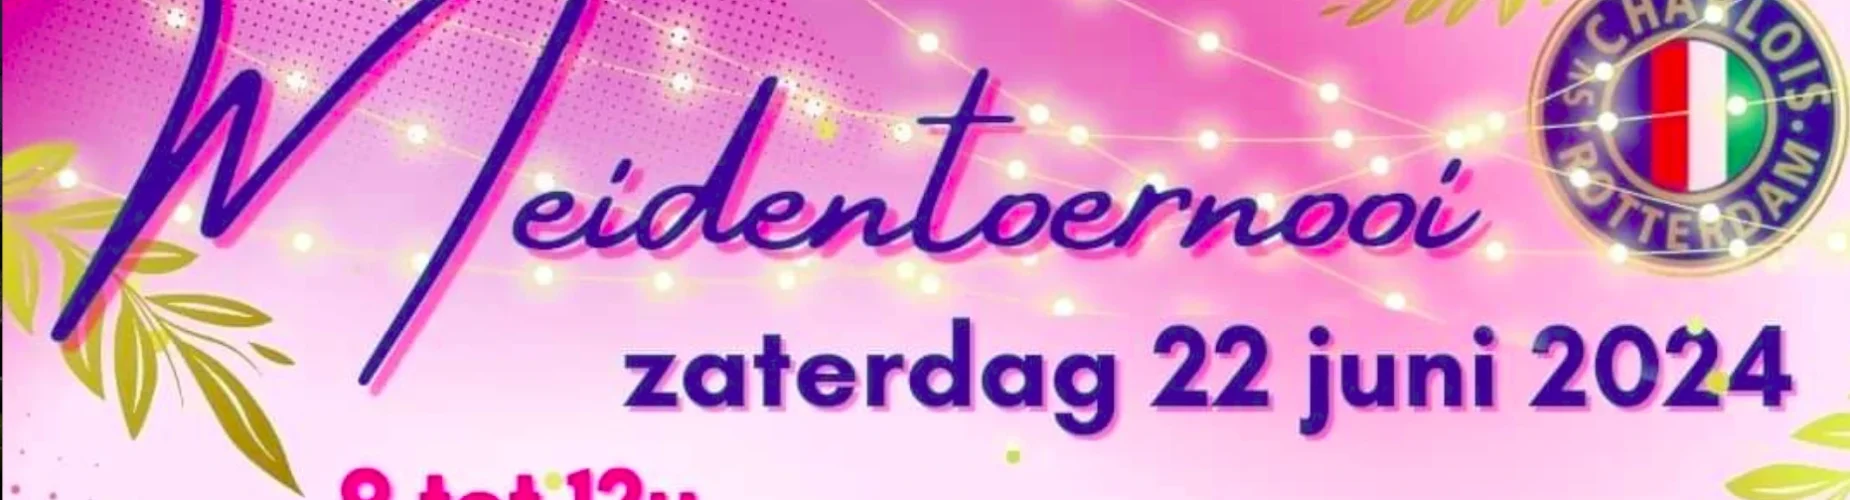 Banner - Meidentoernooi - sv Charlois - Rotterdam